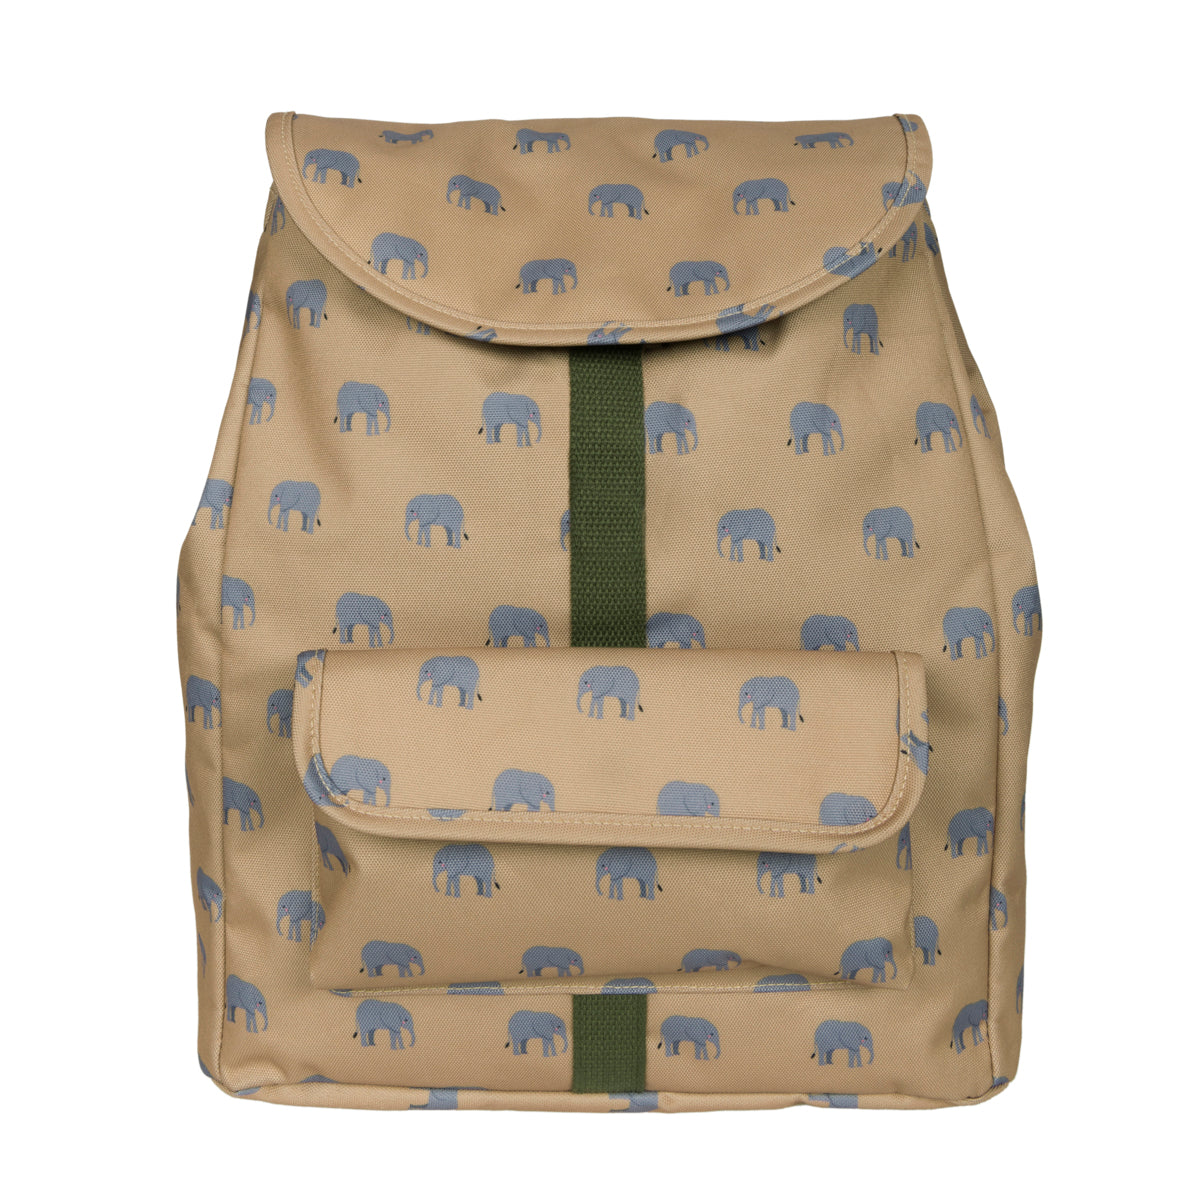 Elephant rucksack by Sophie Allport